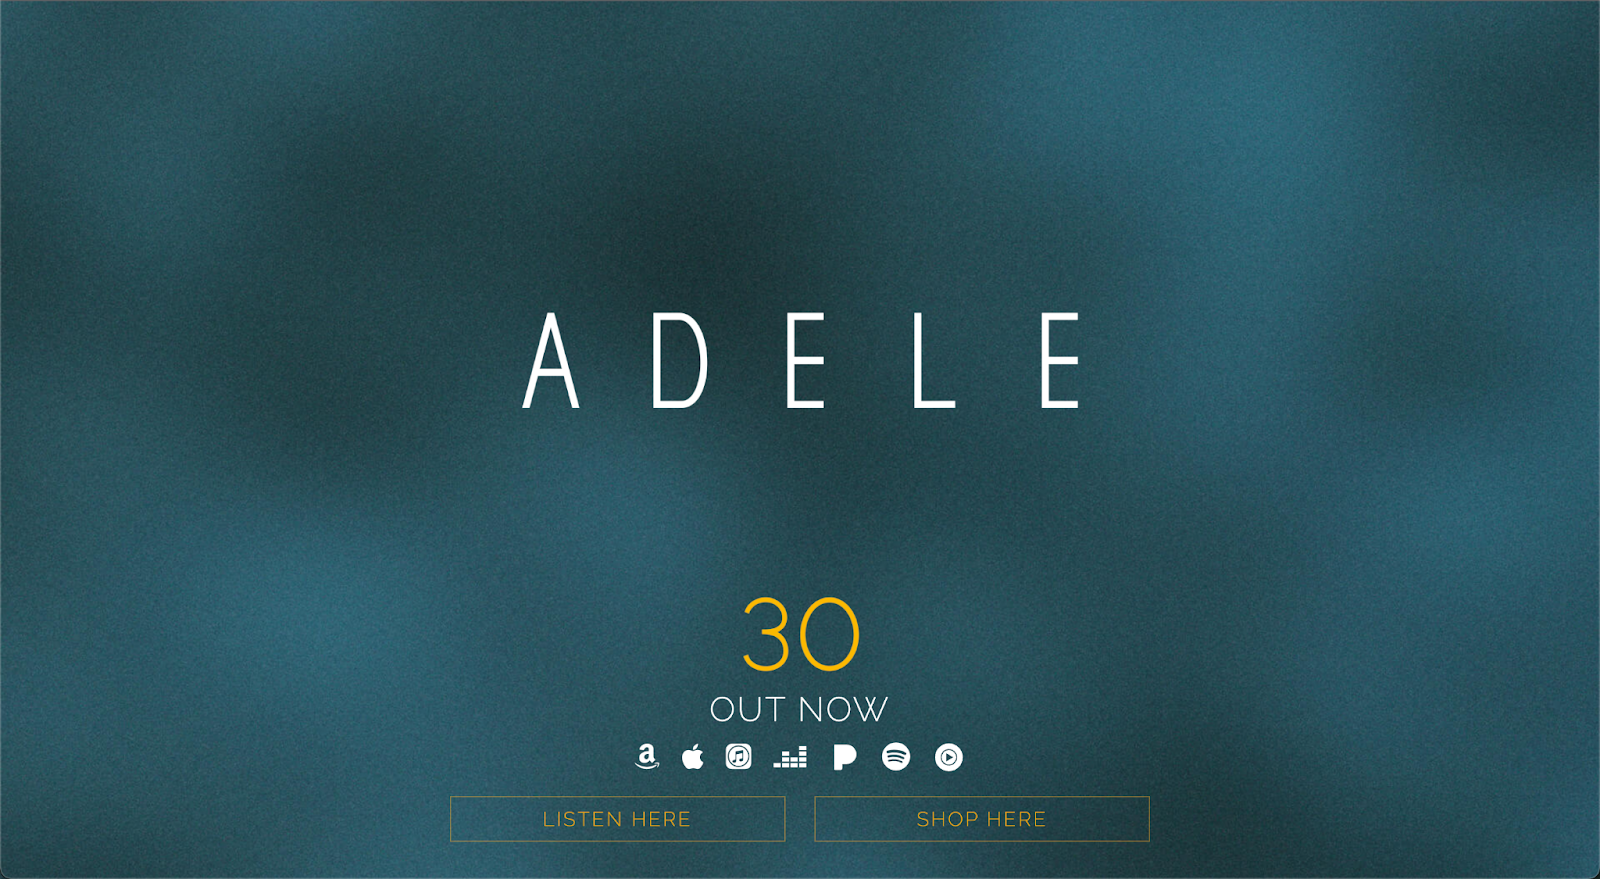 musician website example, adele